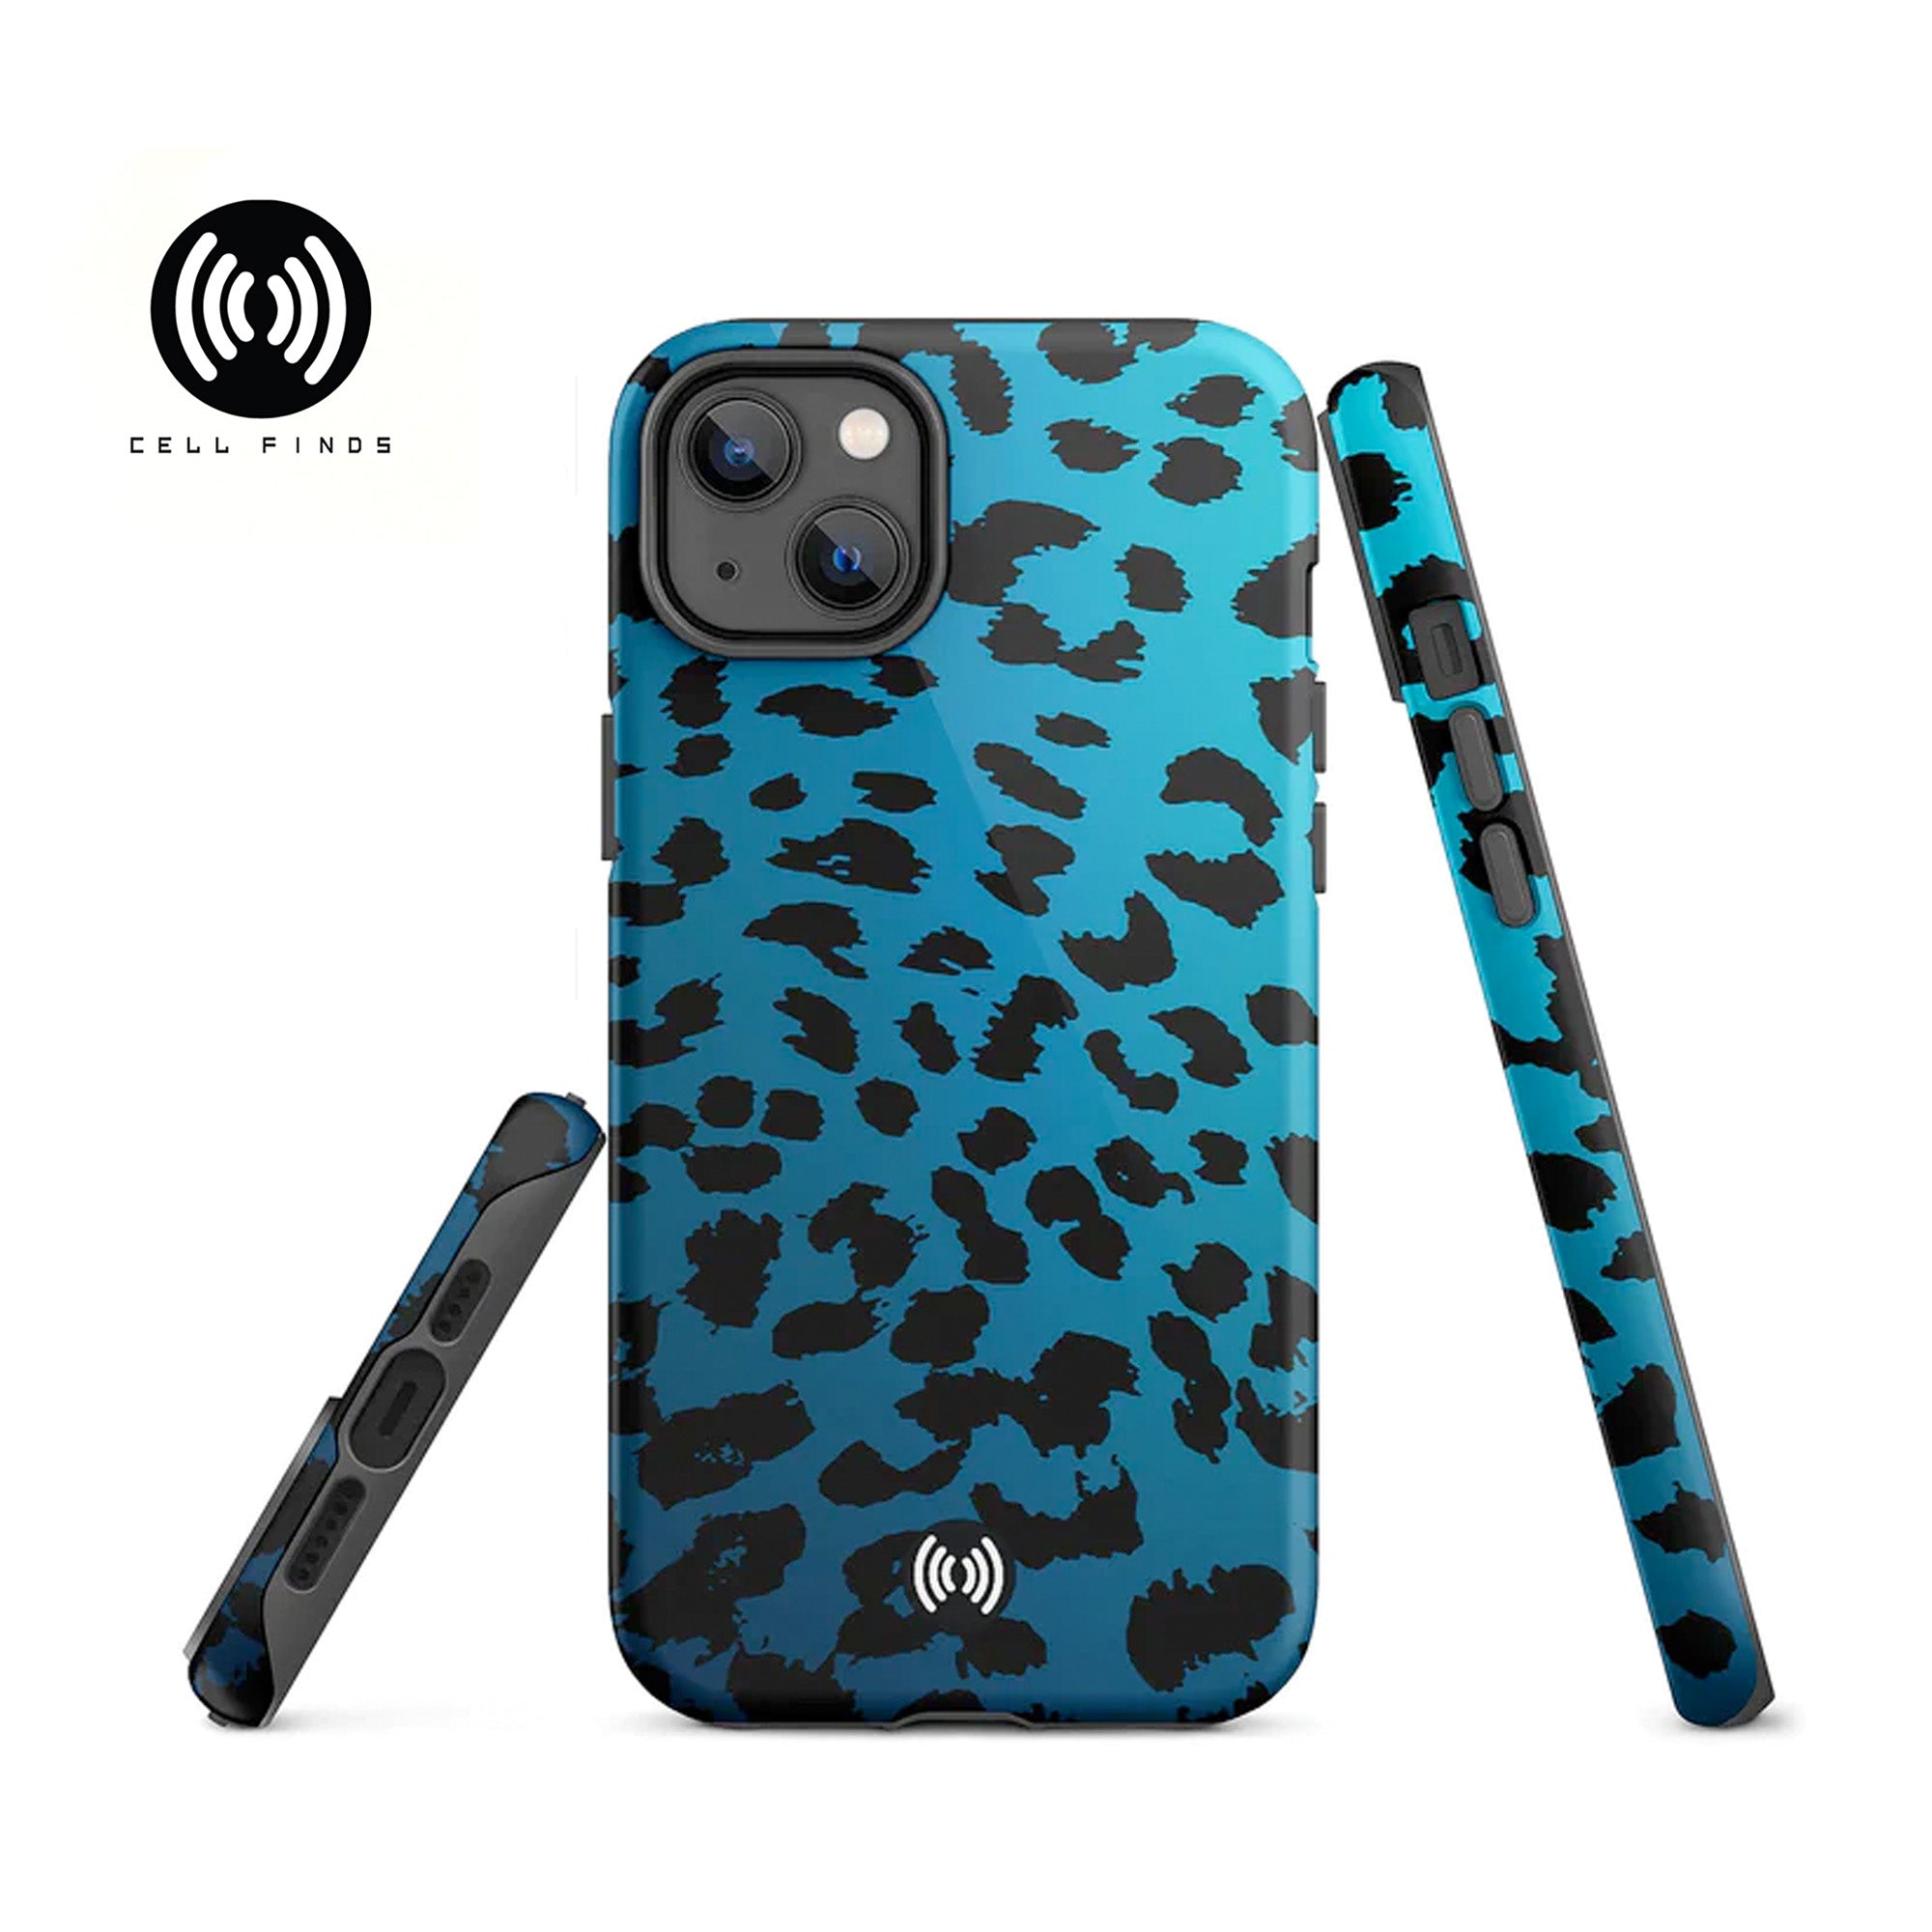 Leopard Aqua Tough iPhone case